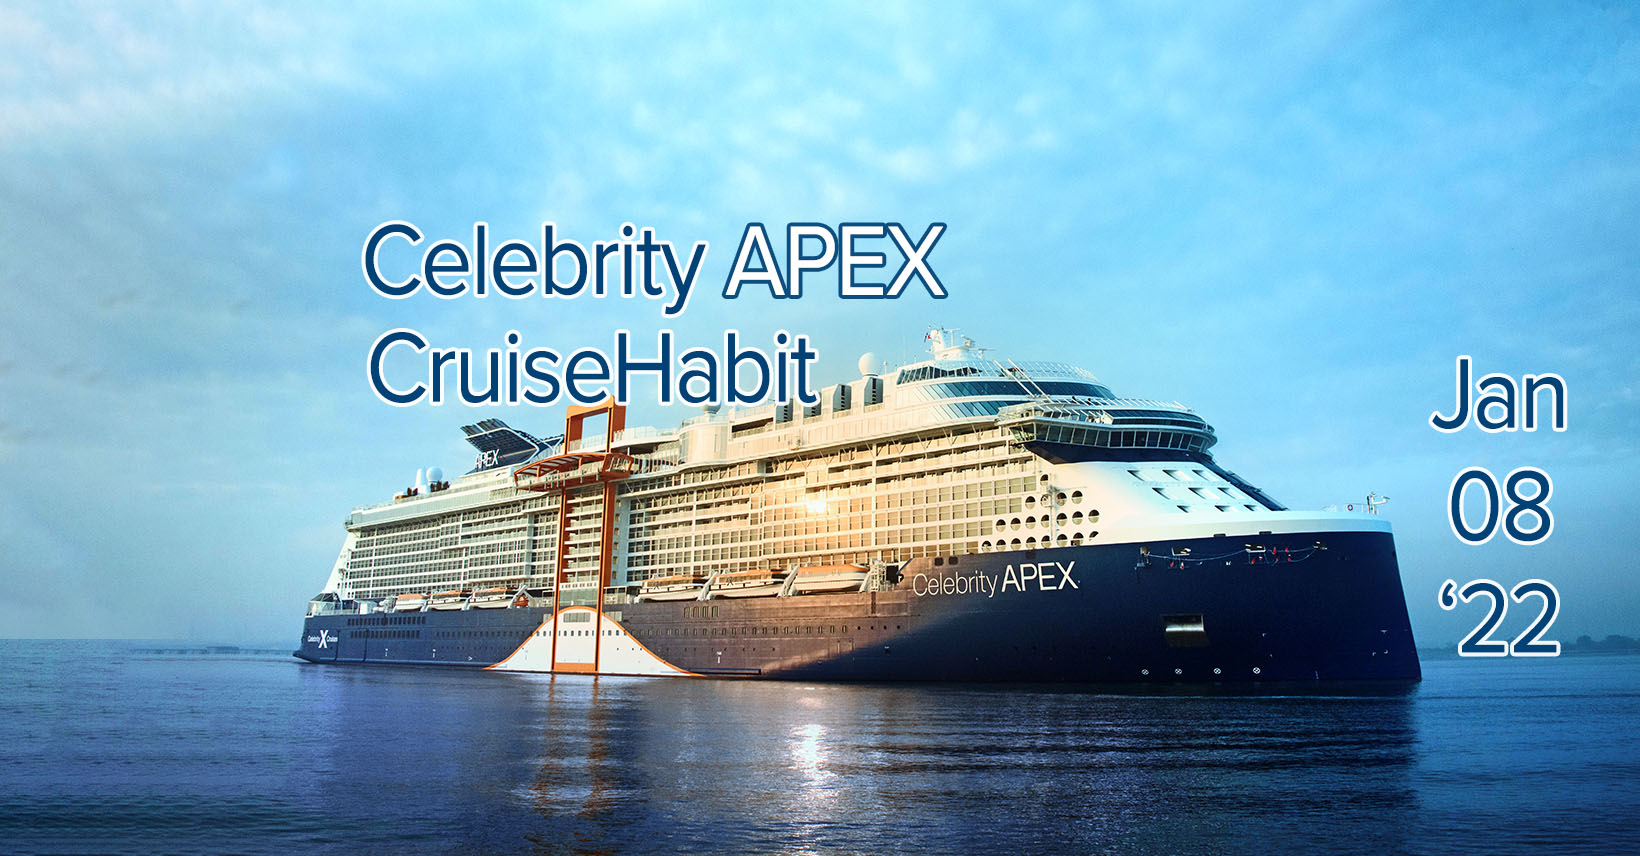 celebrity apex cruise deals